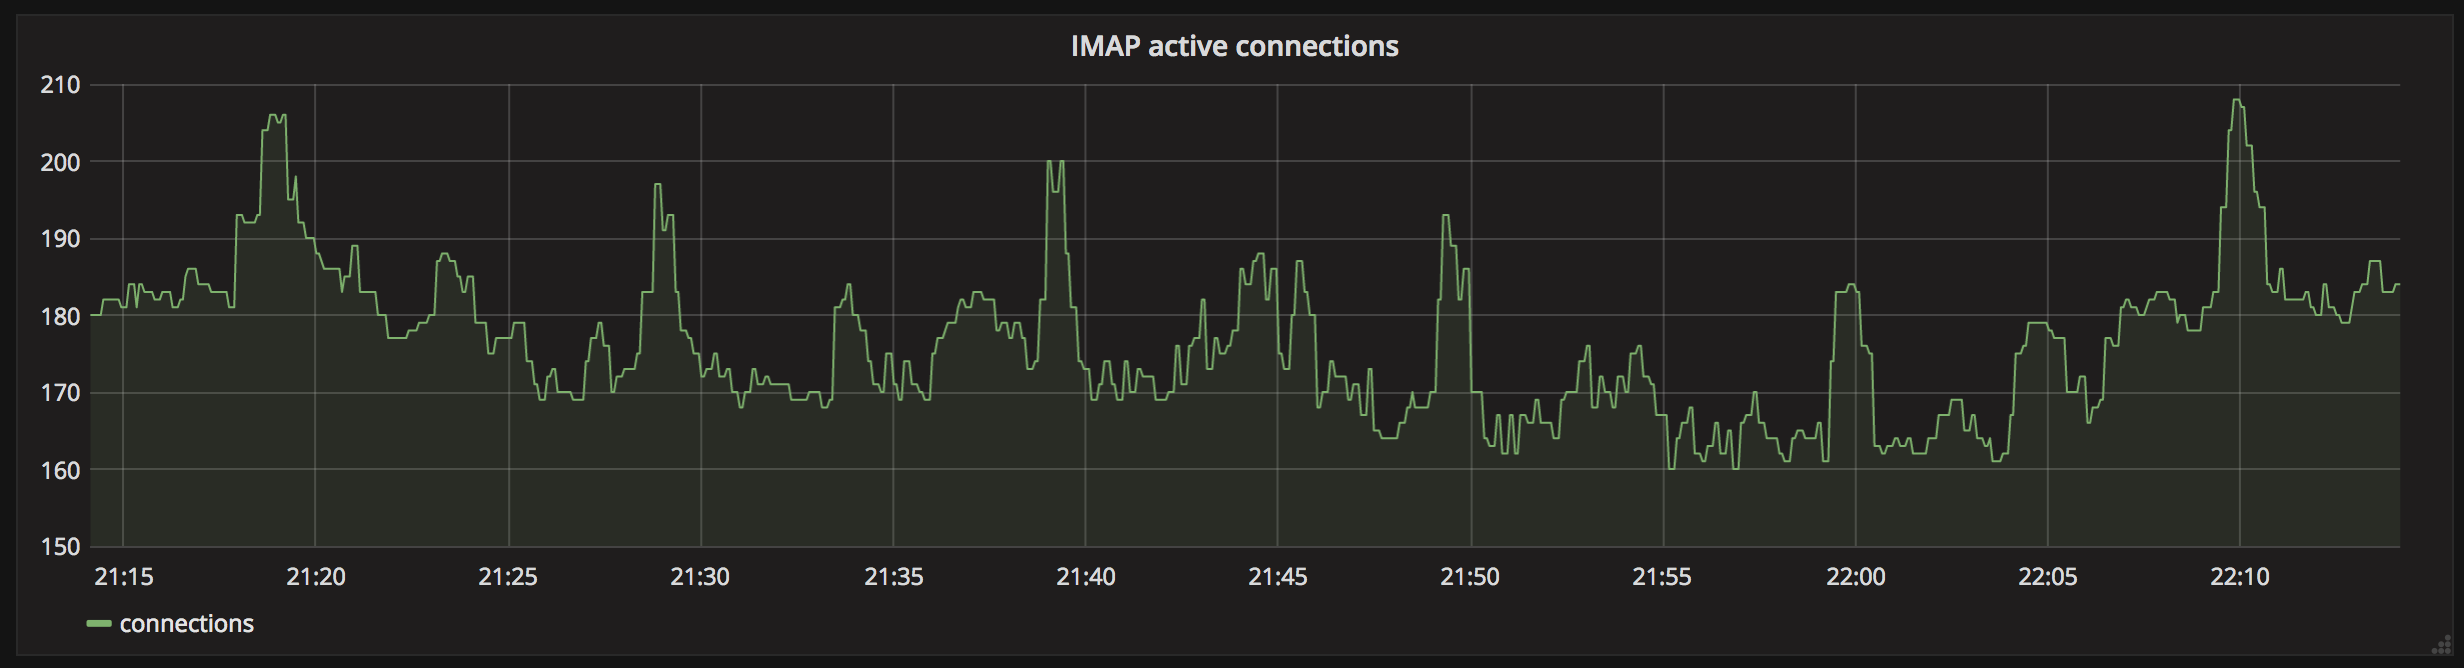 Grafana IMAP connection graph